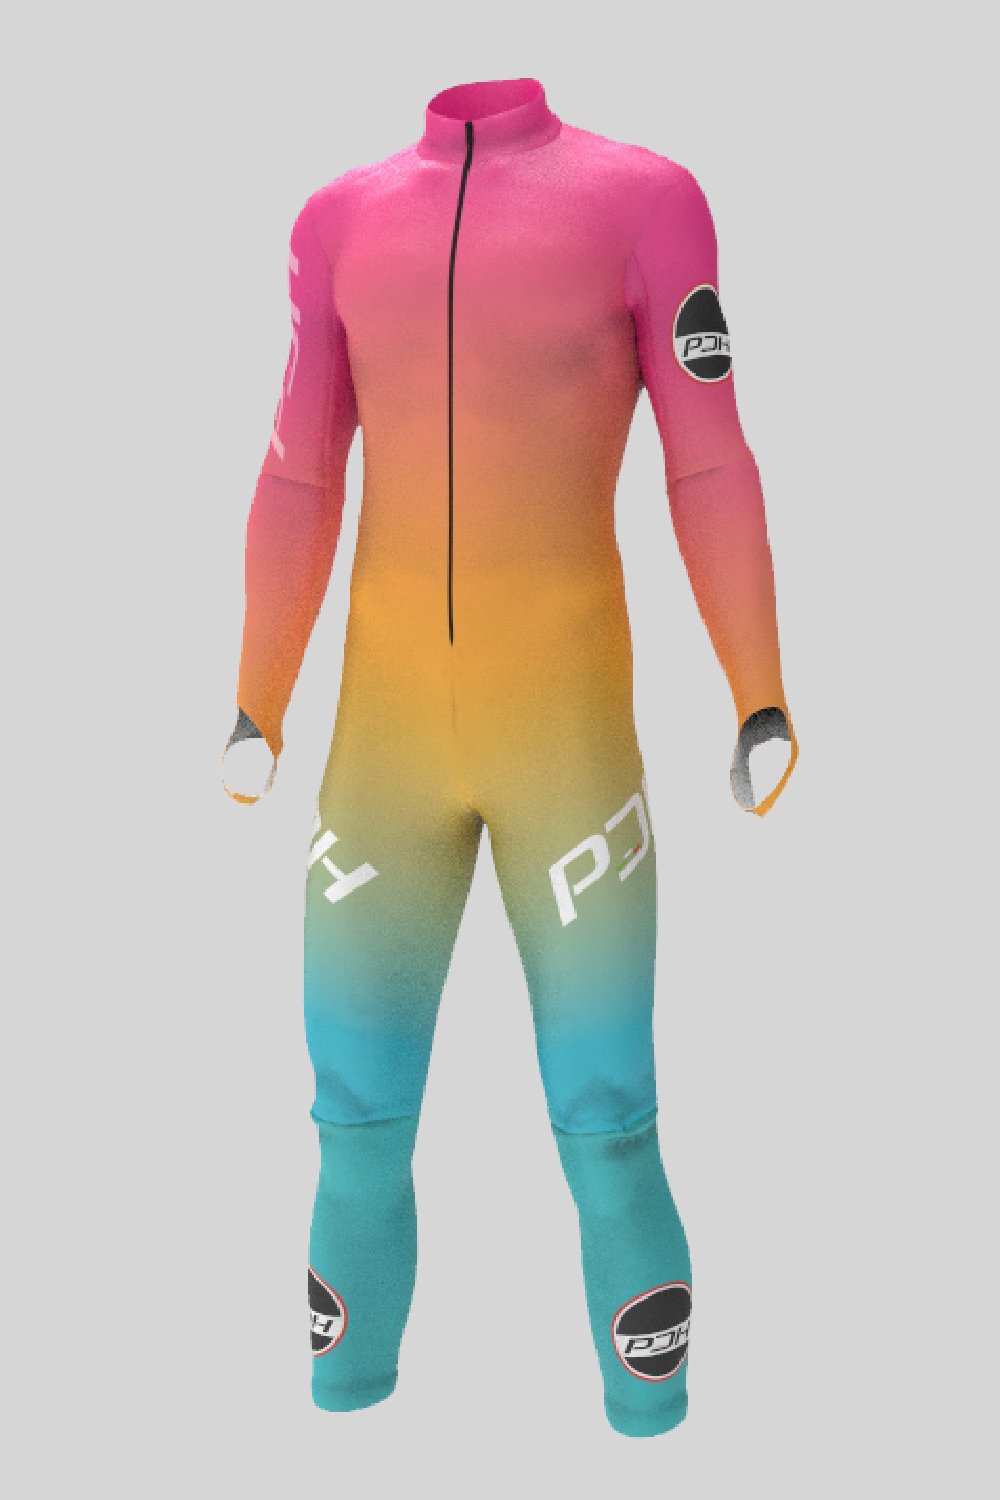 Pro XC Suit | Borah Teamwear